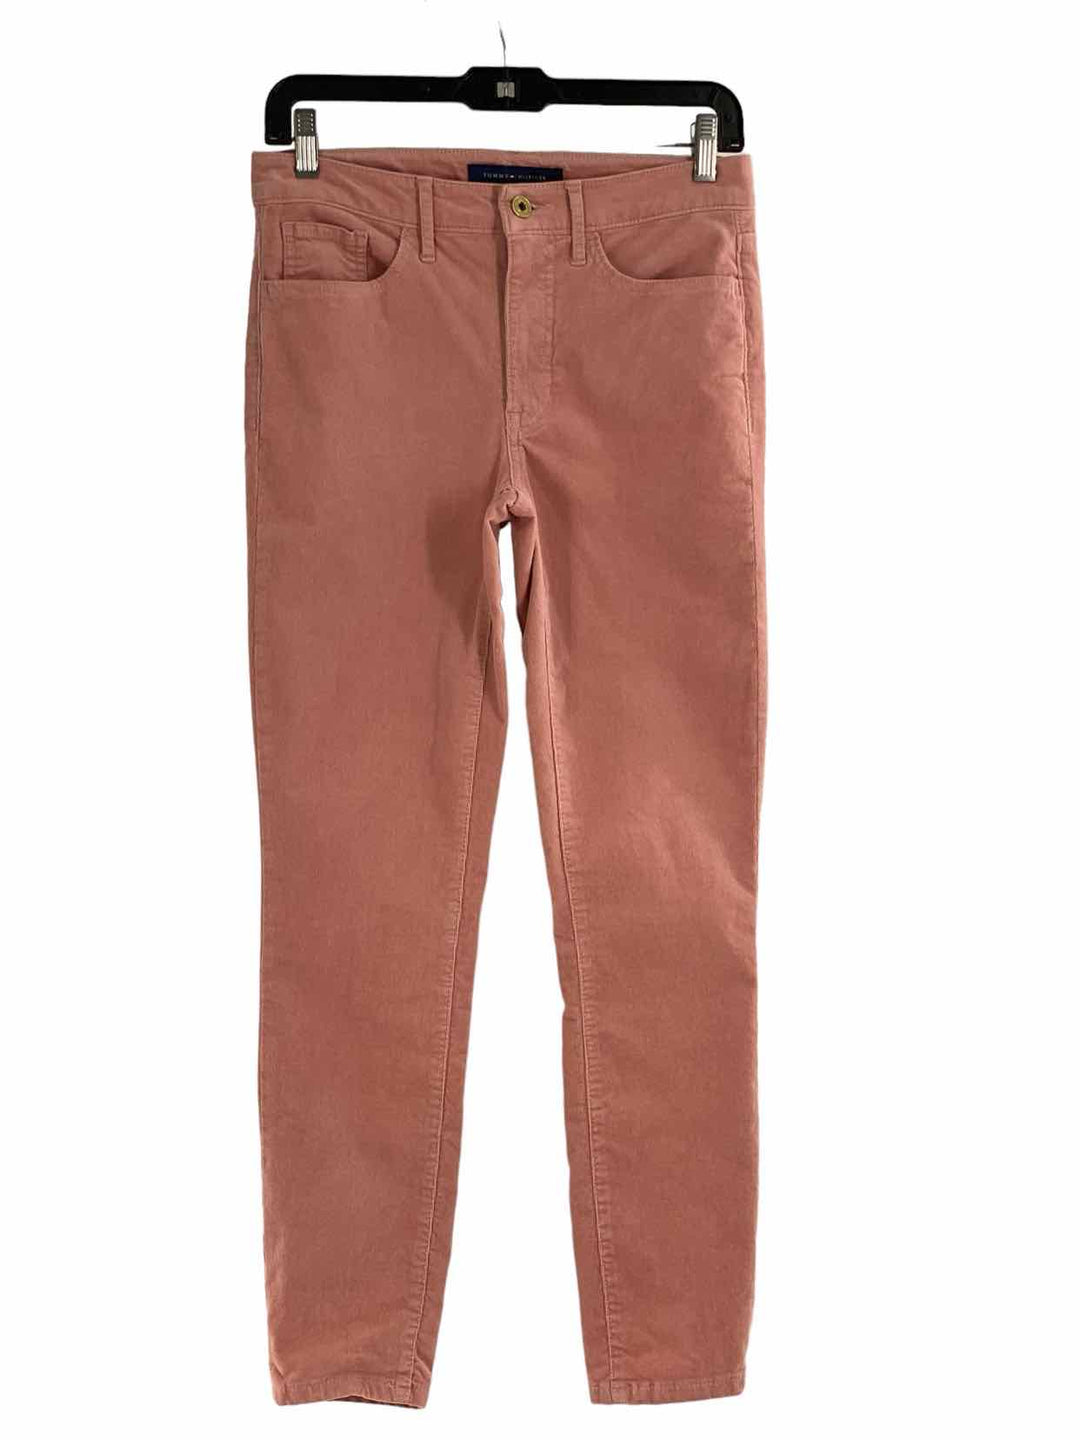 Tommy Hilfiger Size 4 Pink Corduroy Pants